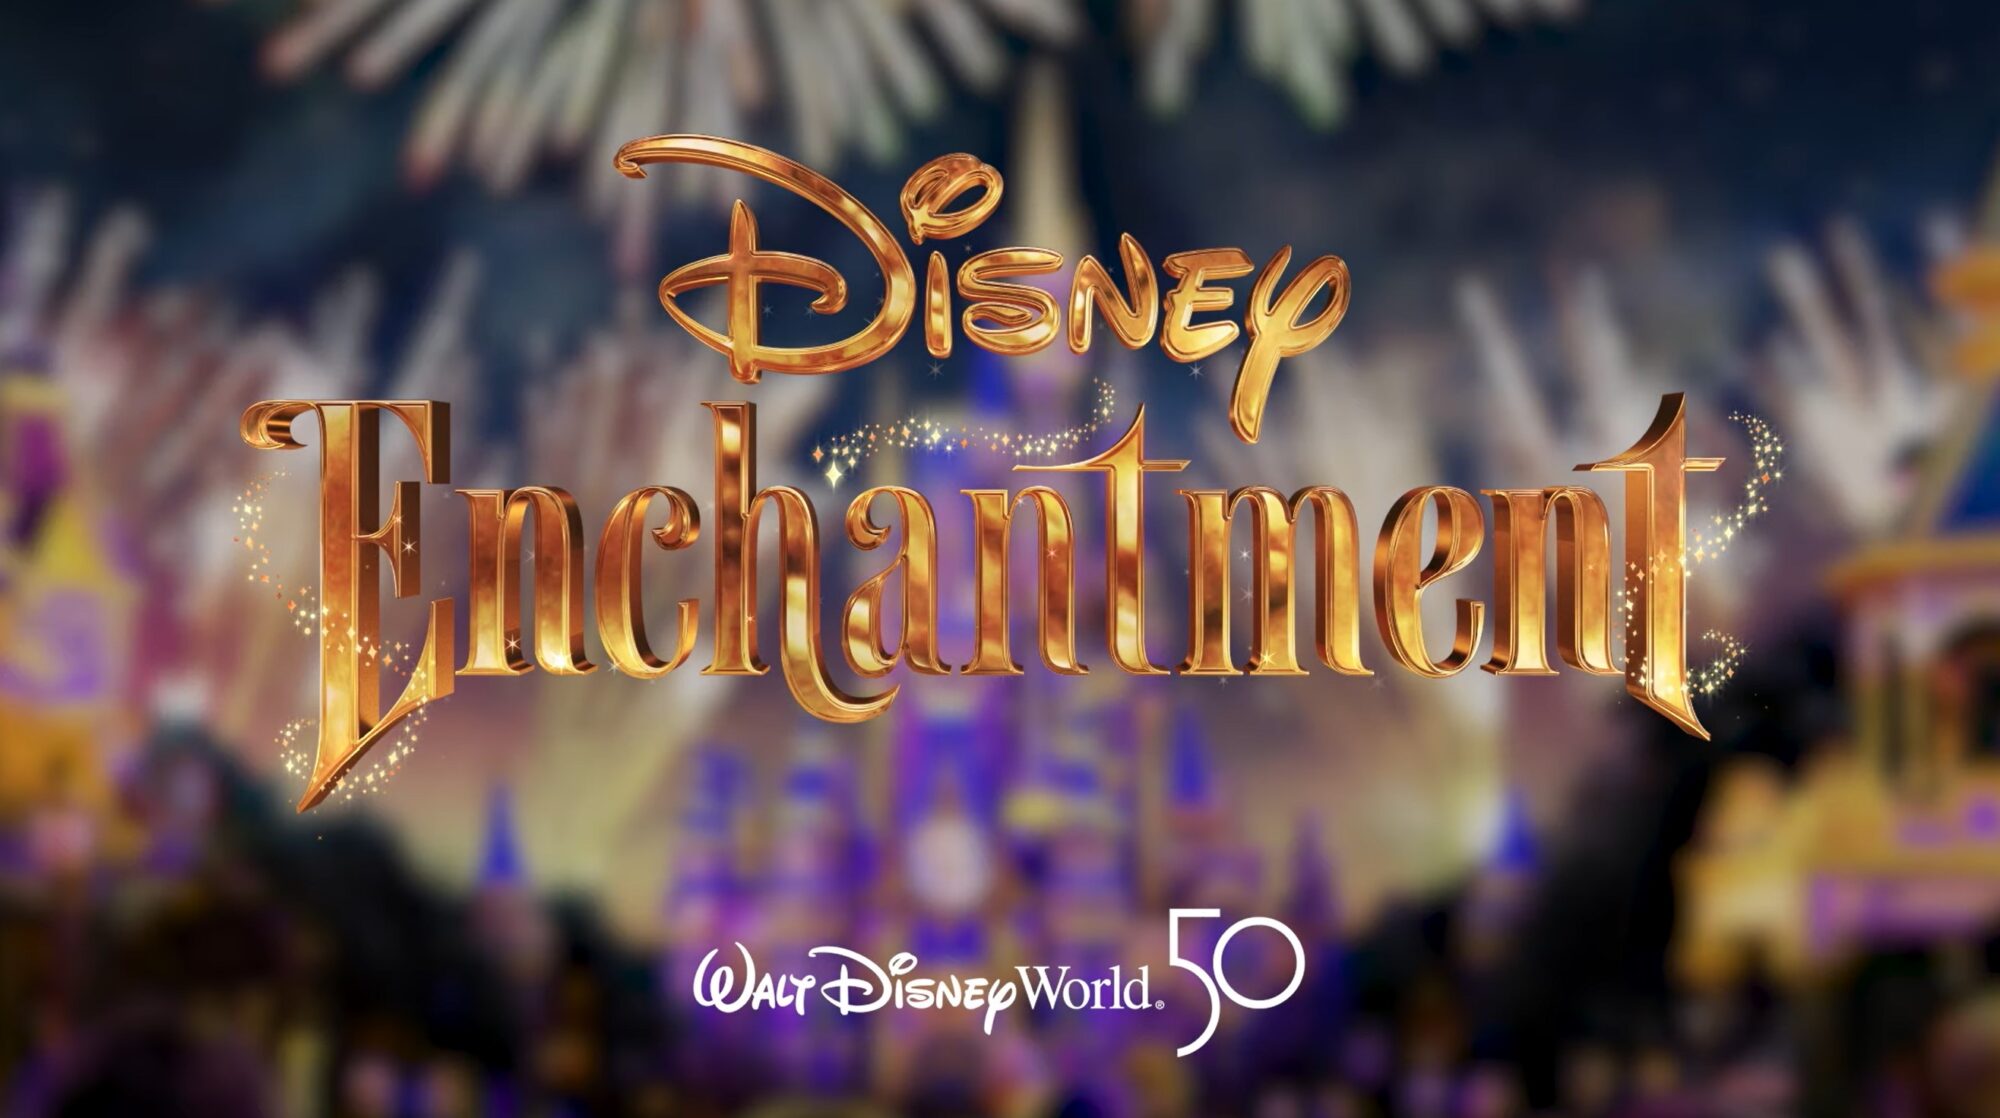 Disney Enchantment